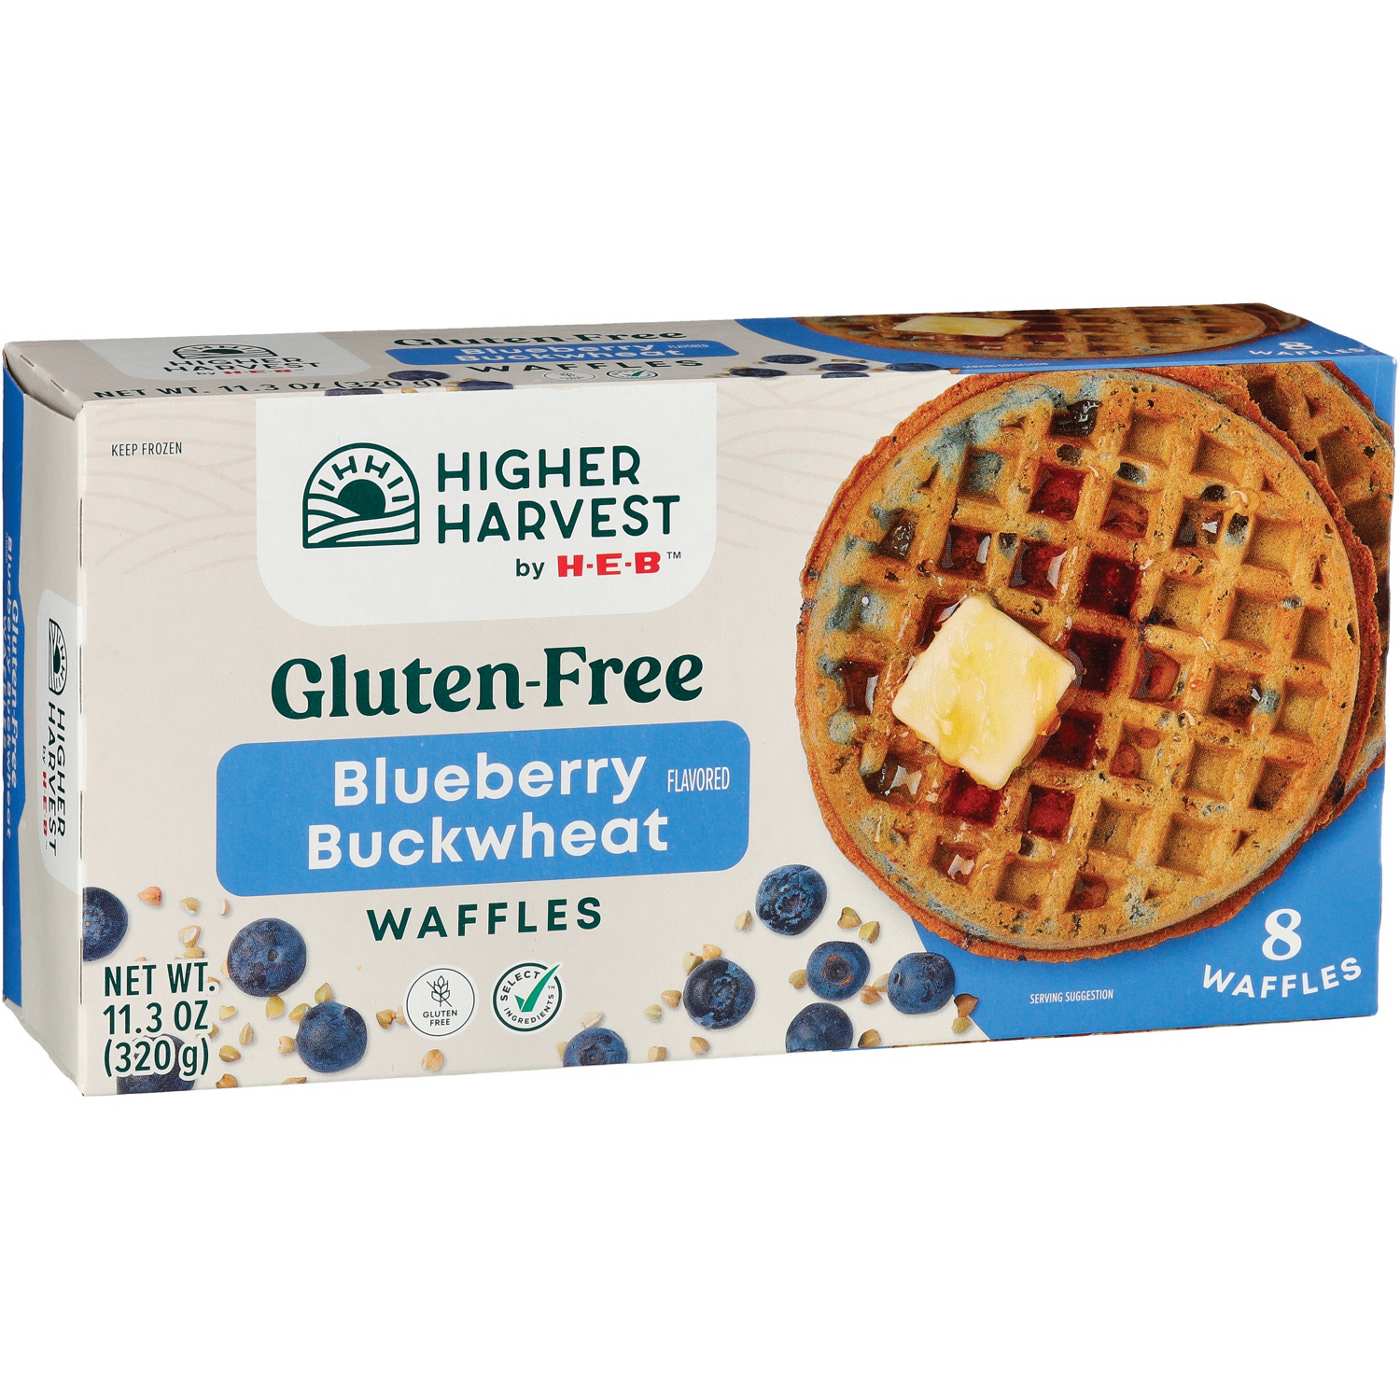 Higher Harvest by H-E-B Gluten-Free Frozen Waffles – Blueberry Buckwheat; image 2 of 2